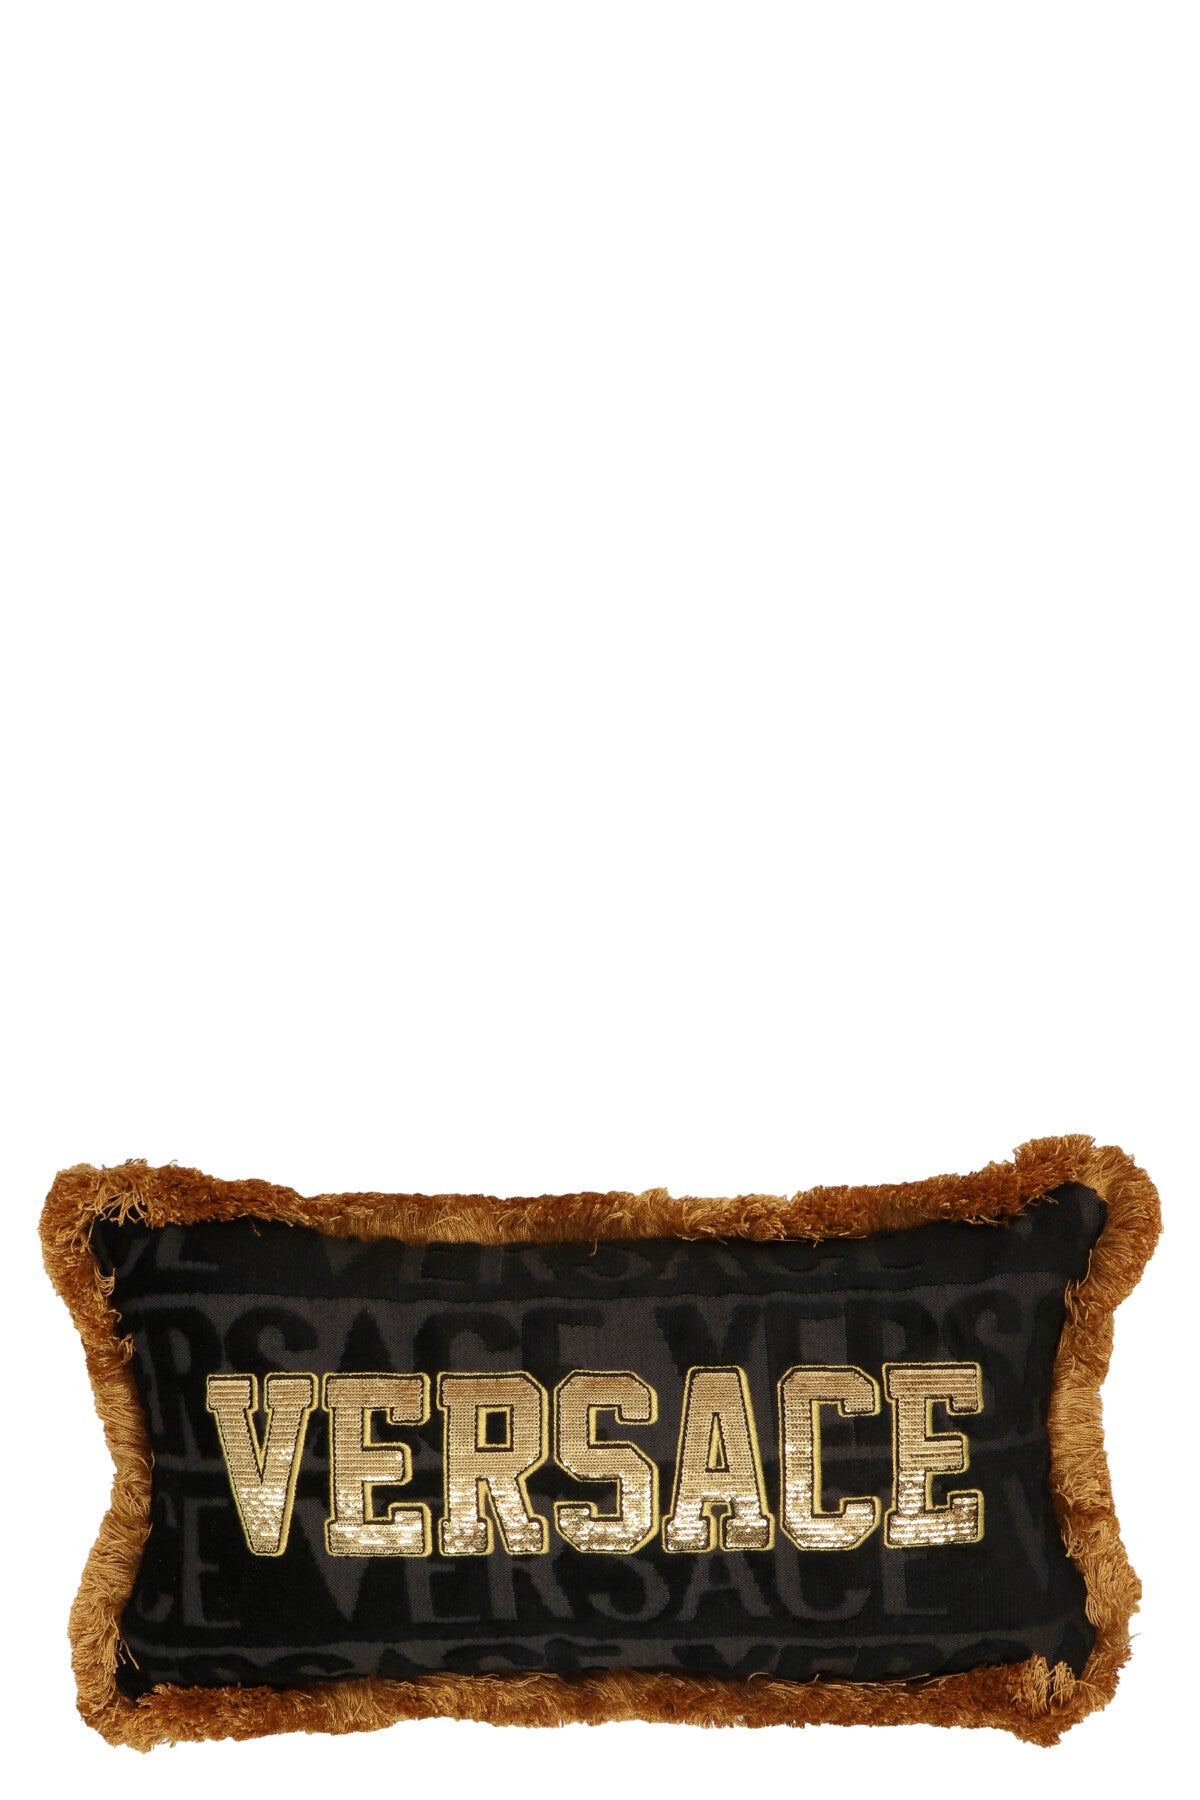 Versace Home Logo Cushion In Black